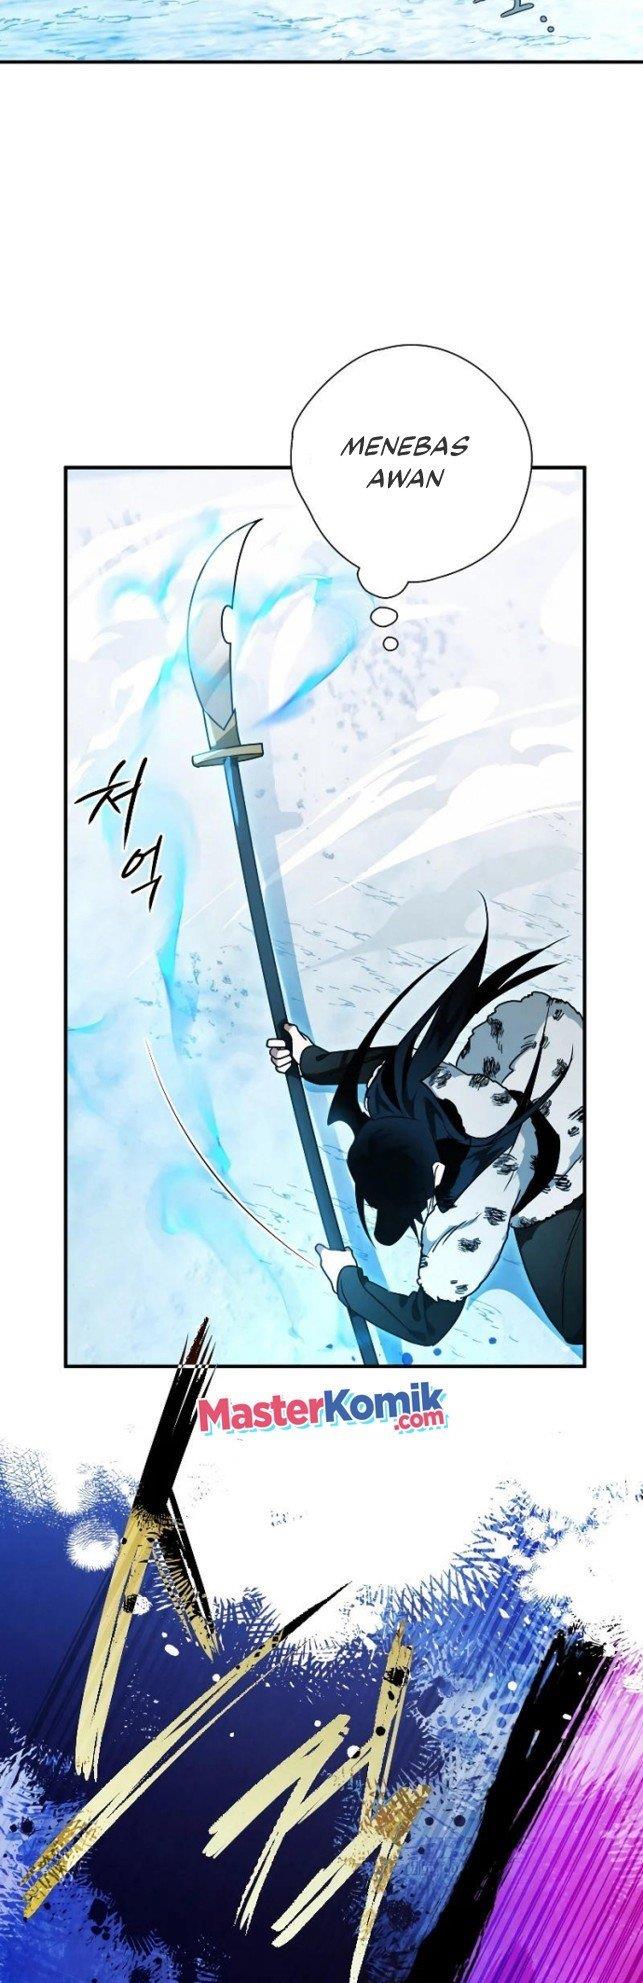 Heavenly Sword’s Grand Saga Chapter 19